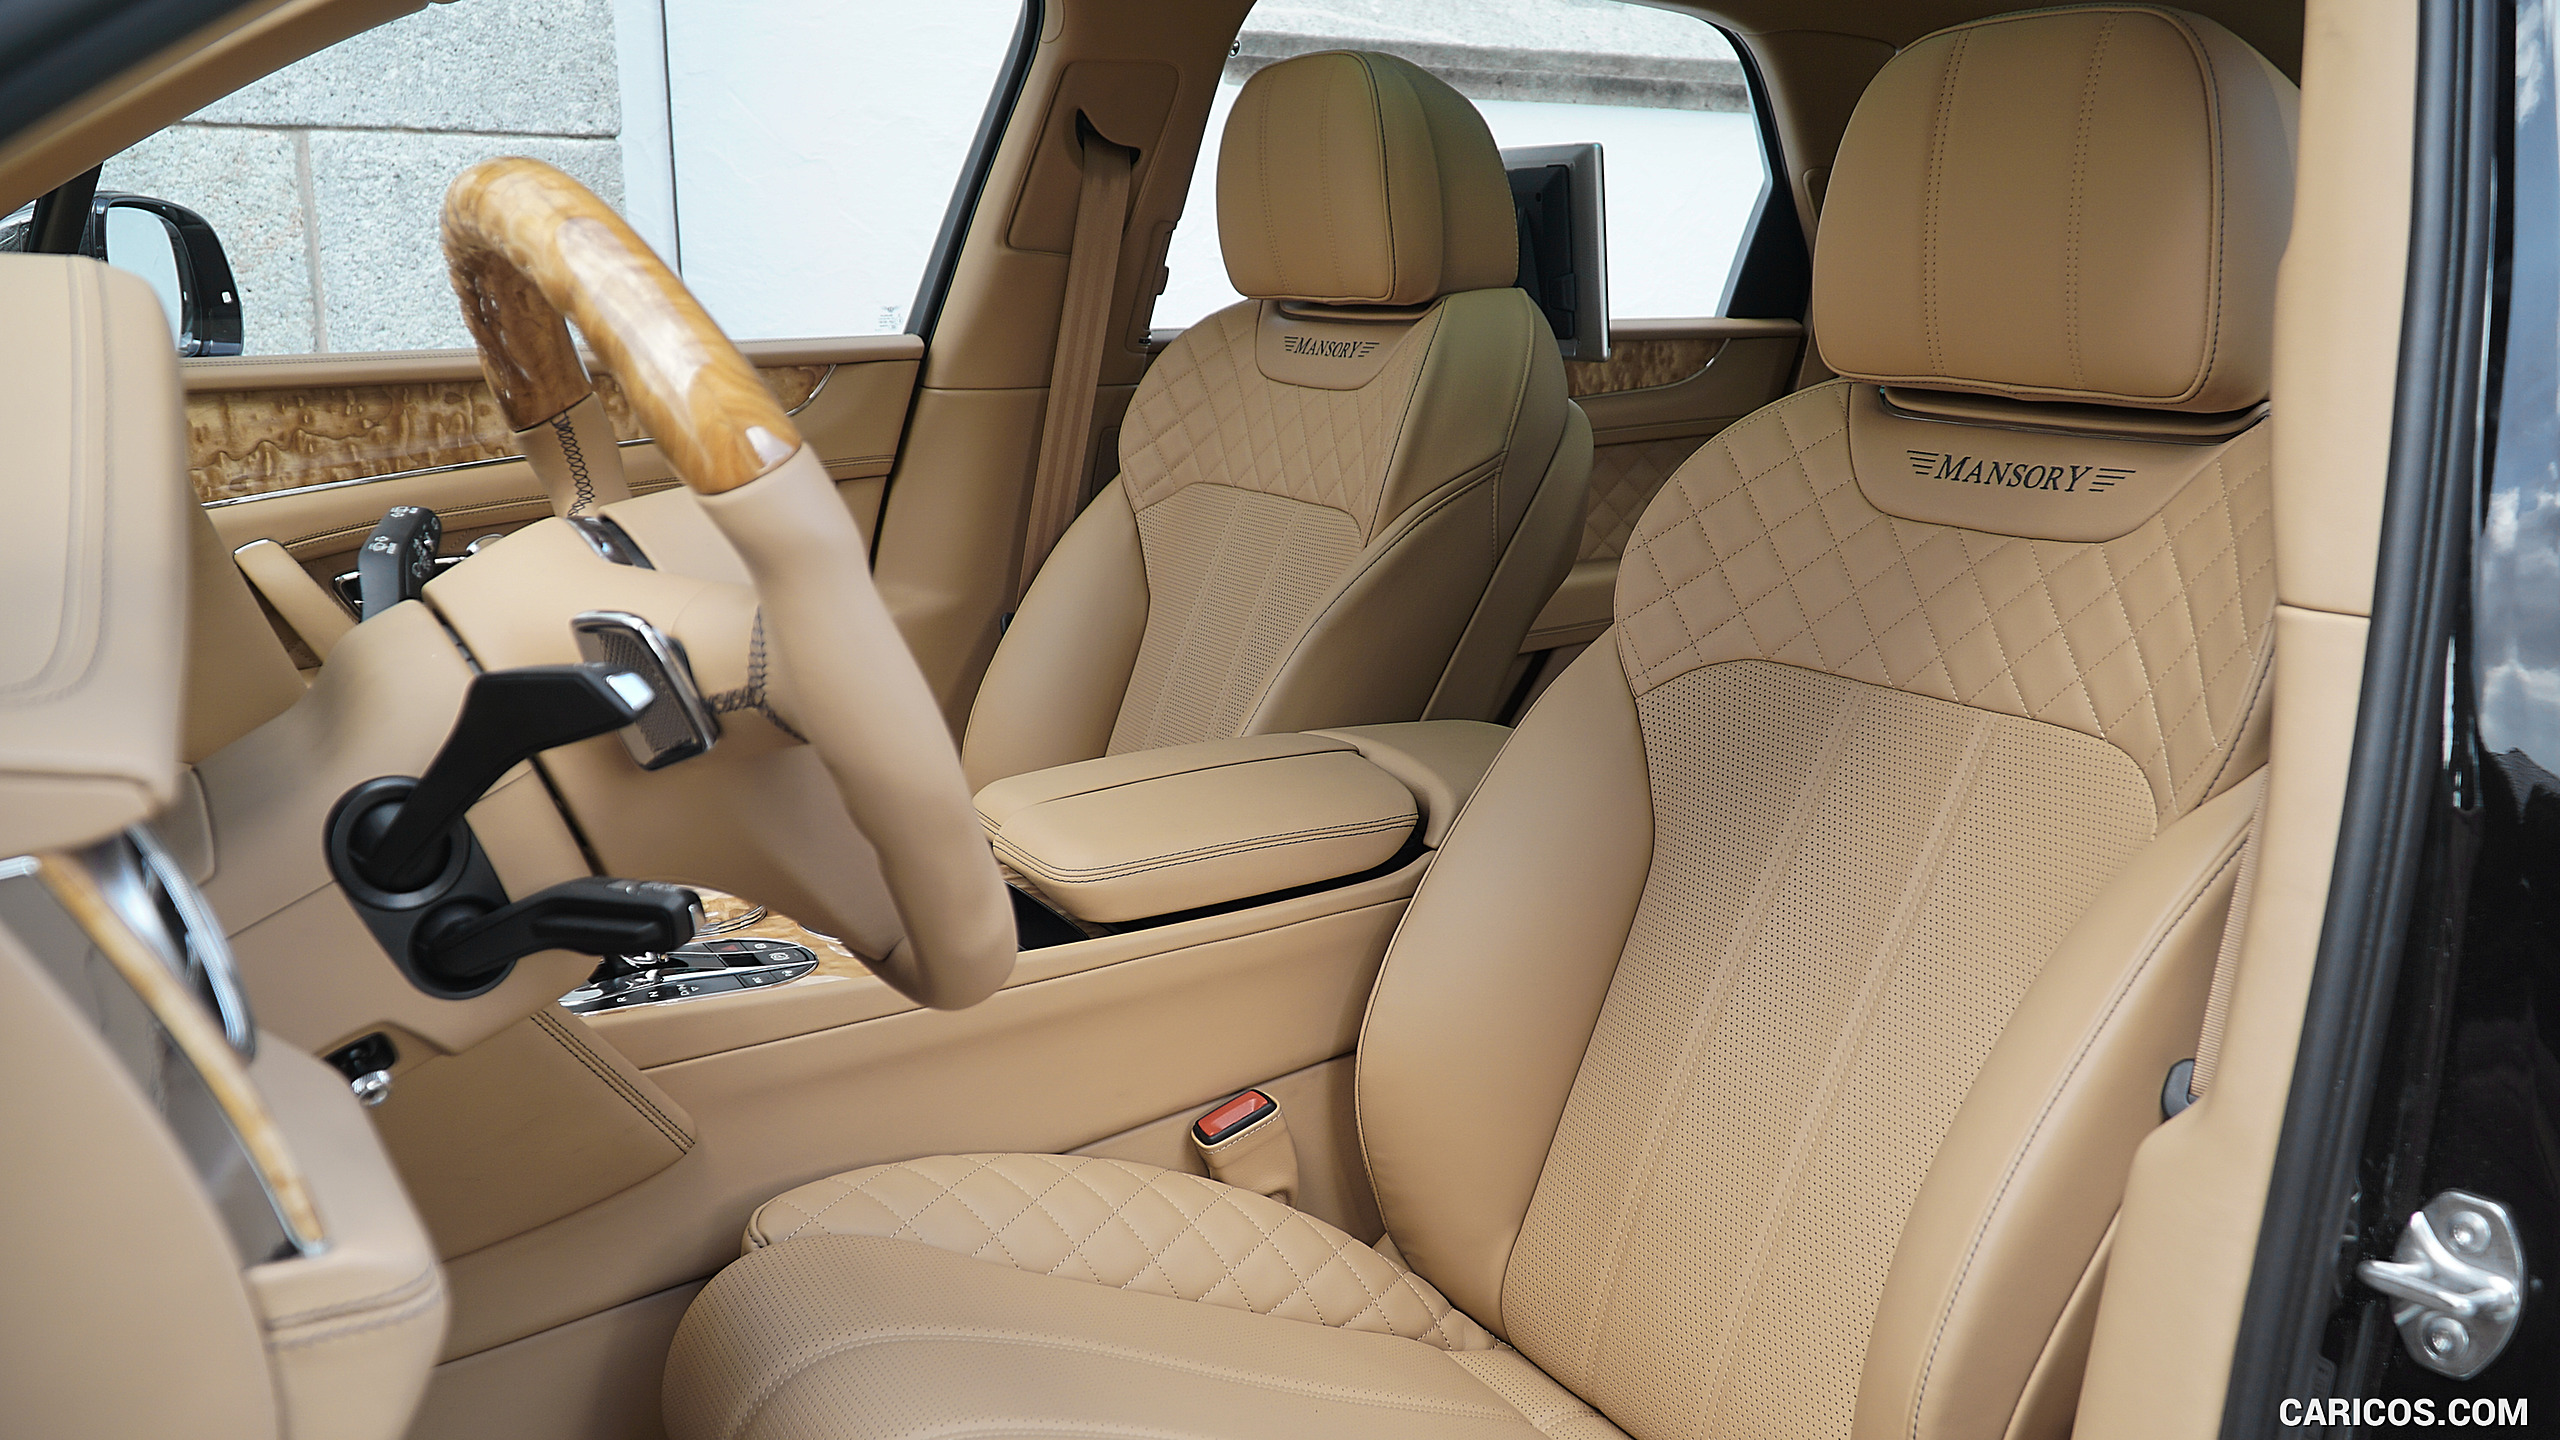 2017 MANSORY Bentley Bentayga - Interior, Seats, #8 of 12